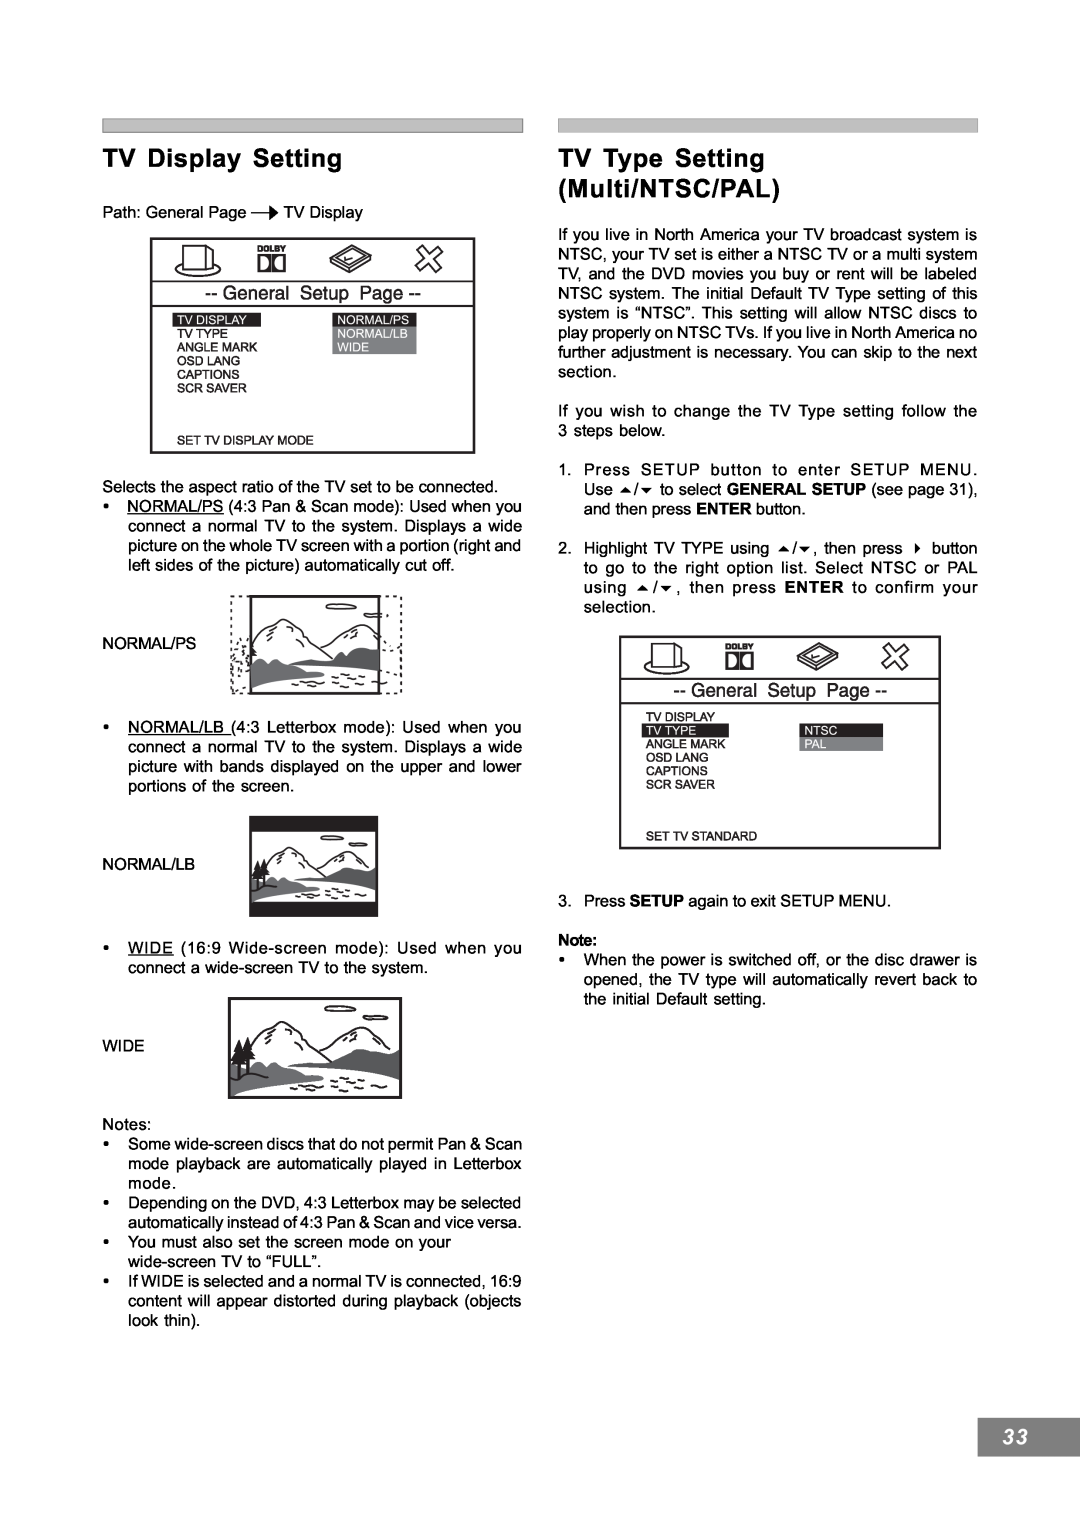 Emerson AV101 manual TV Display Setting, TV Type Setting Multi/NTSC/PAL 